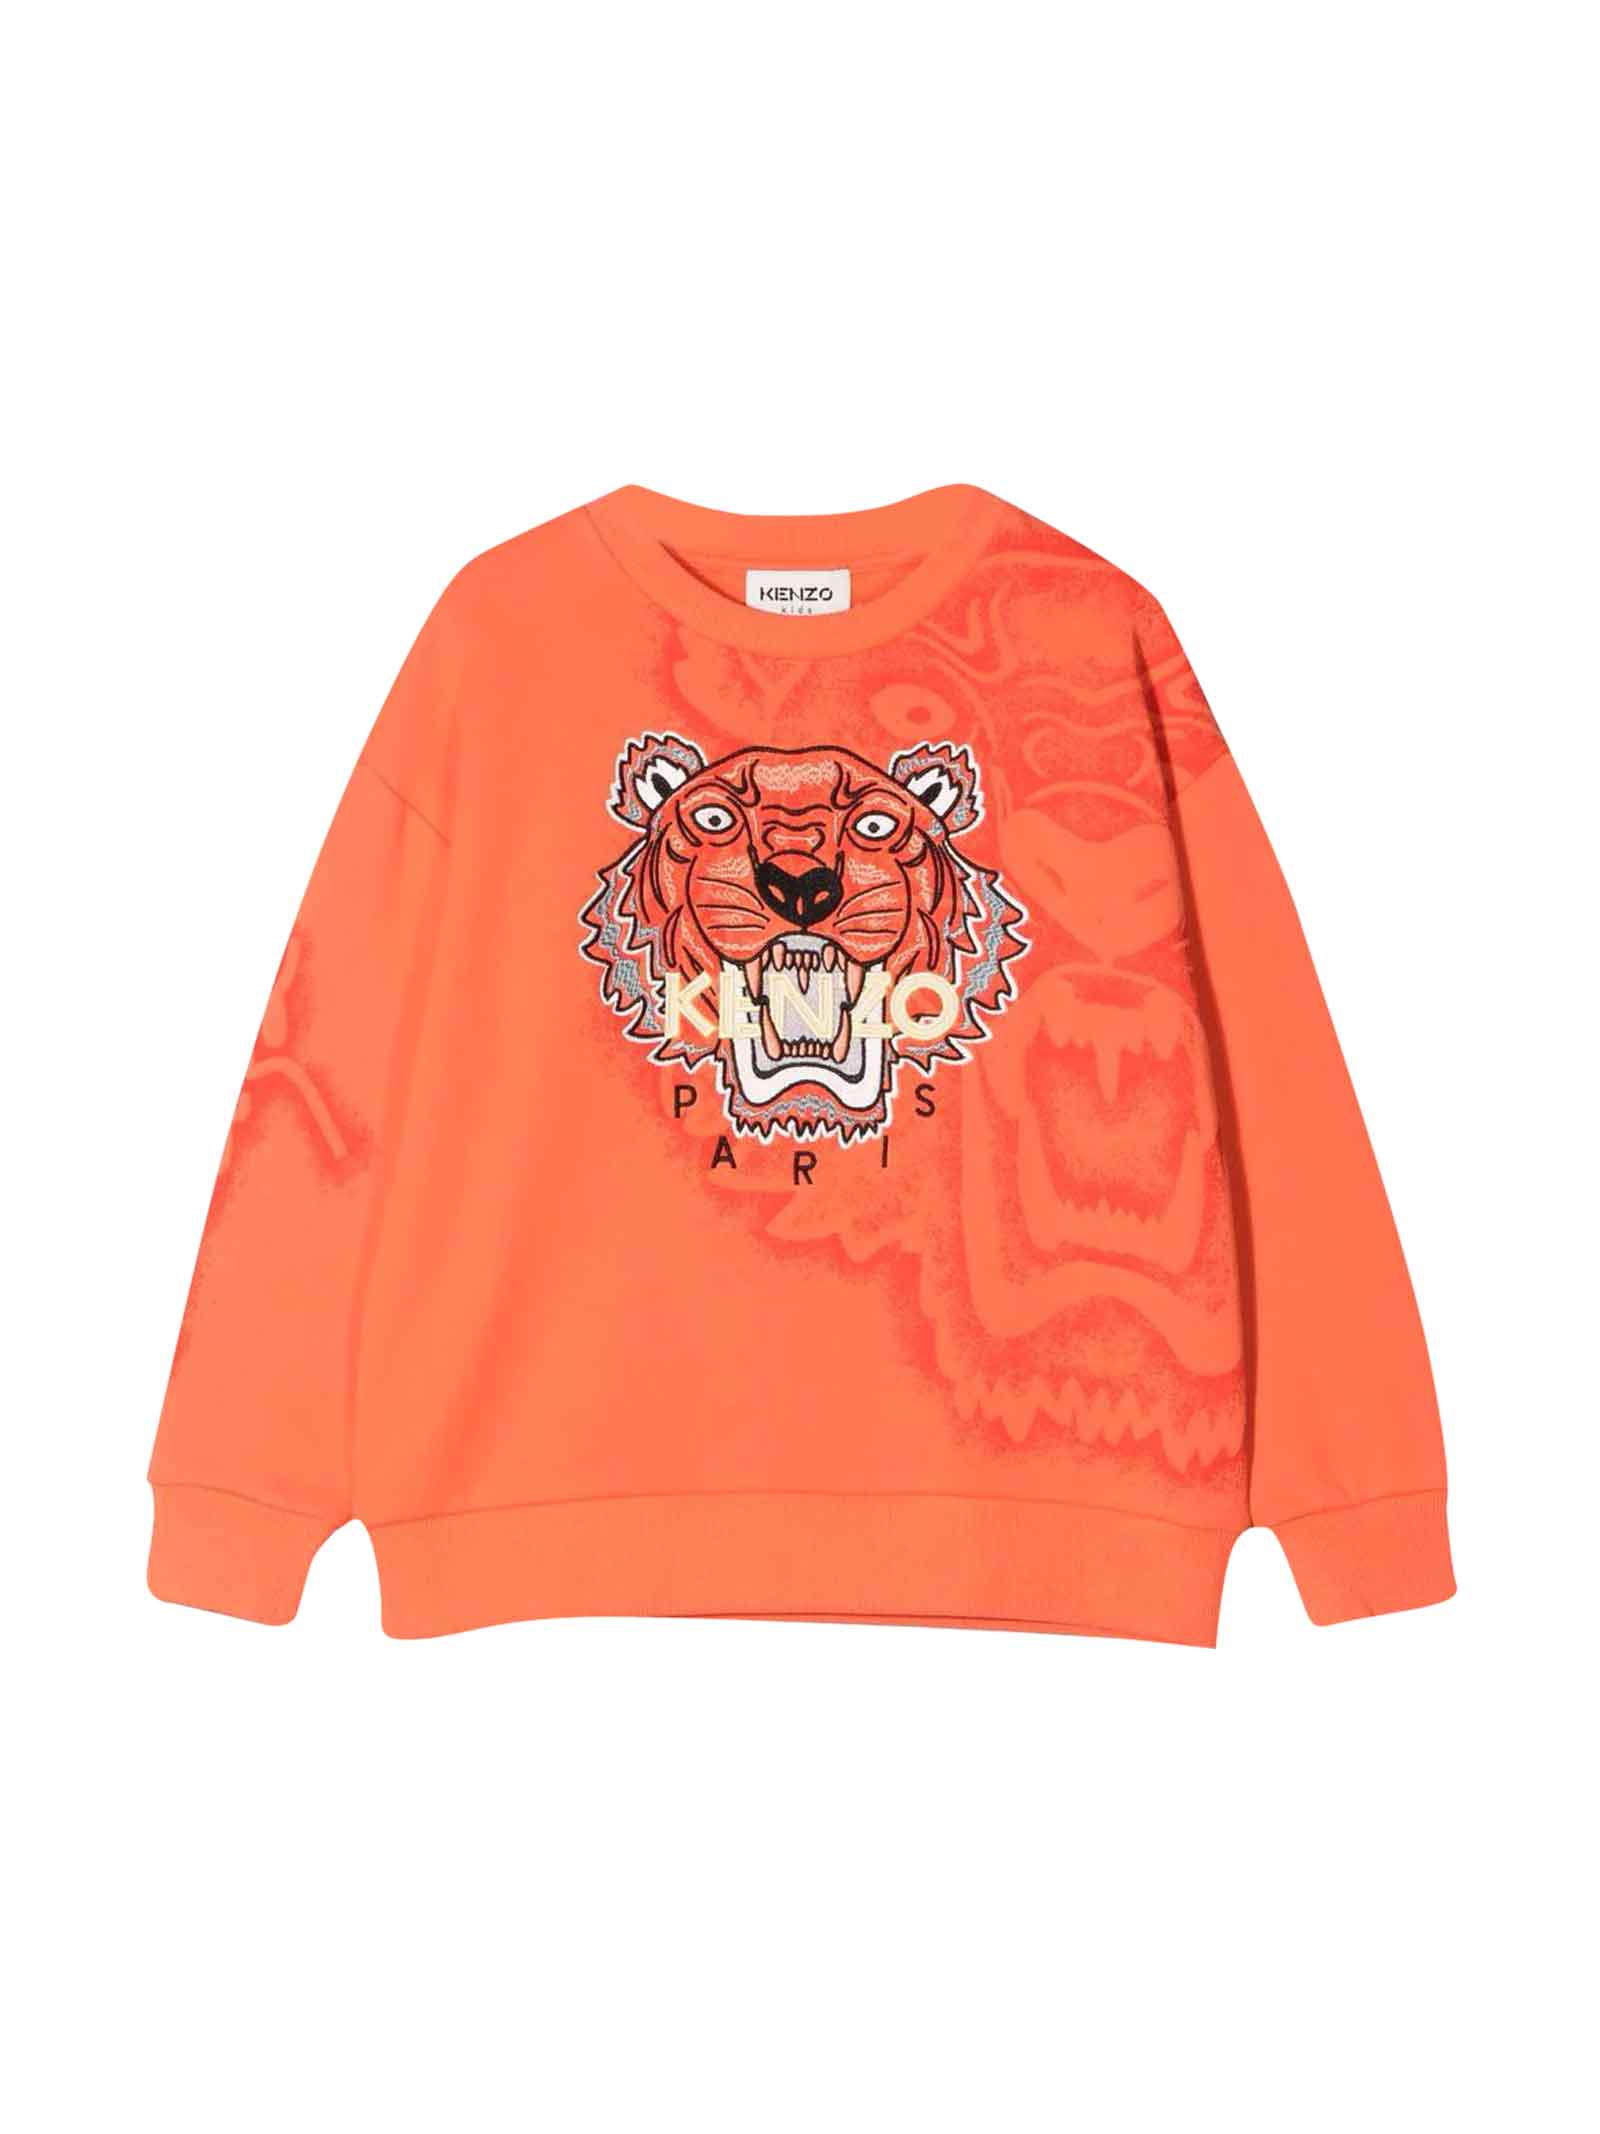 Kenzo Kids Unisex Orange Crewneck Sweatshirt With Tiger Head Print, Elastic Cuffs And Long Sleeves By.